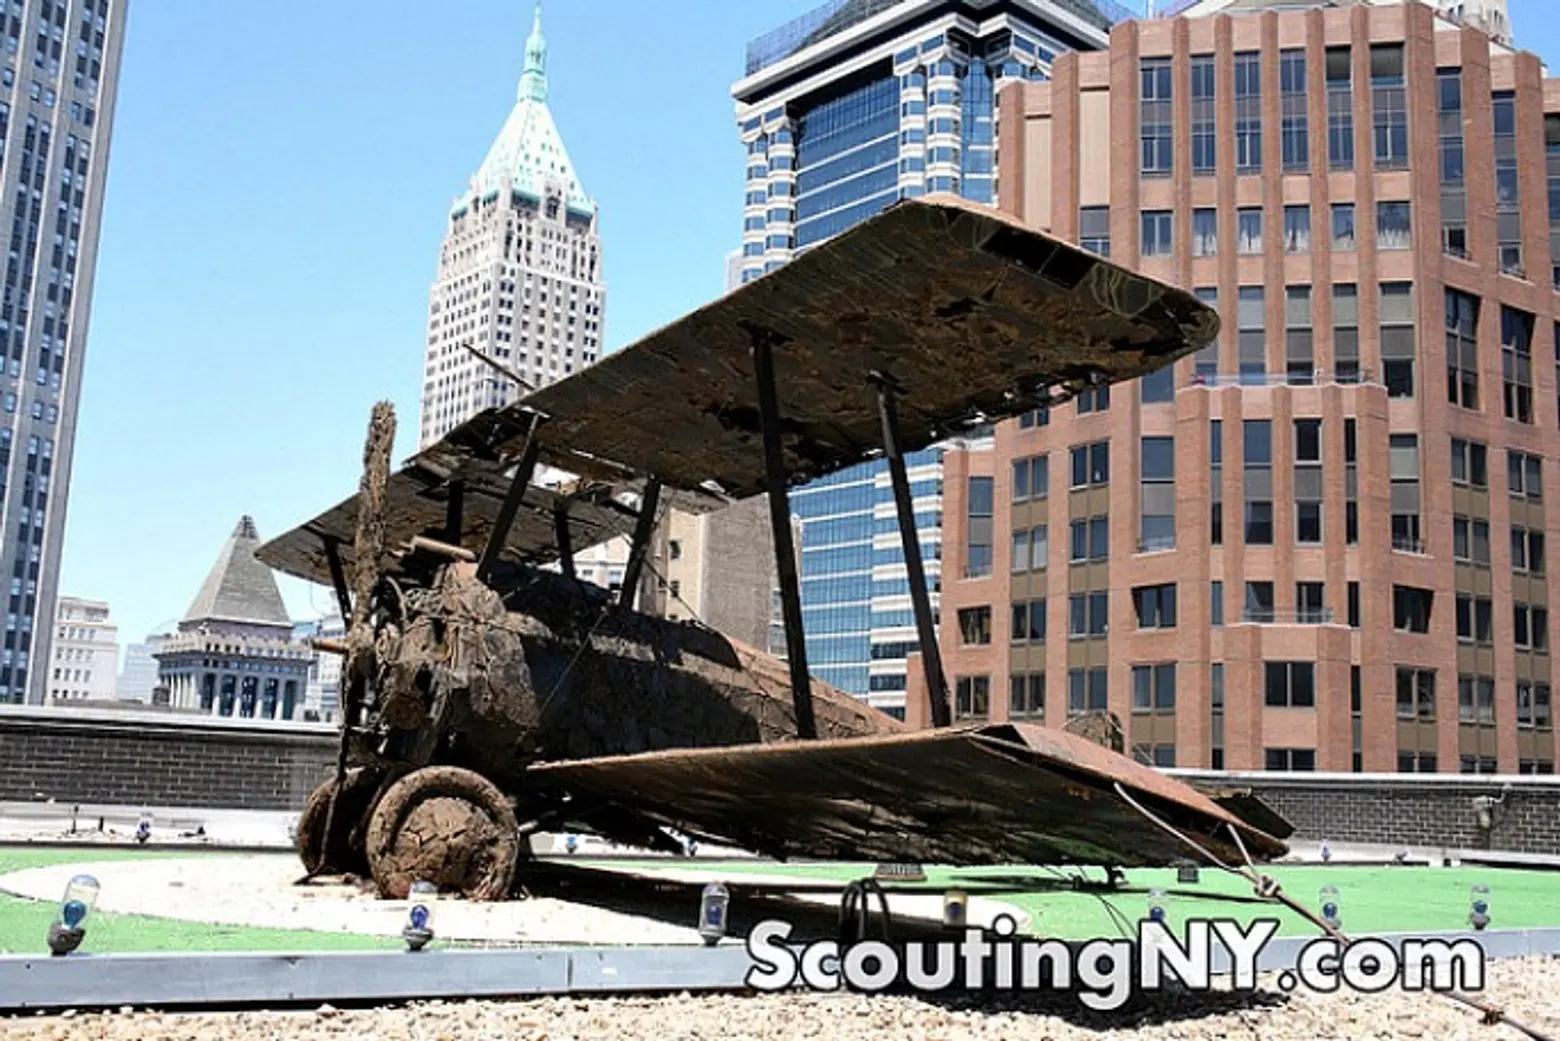 WWI fighter plane, 77 Water Street, British Sopwith Camel, NYC public art, William Kaufman Organization